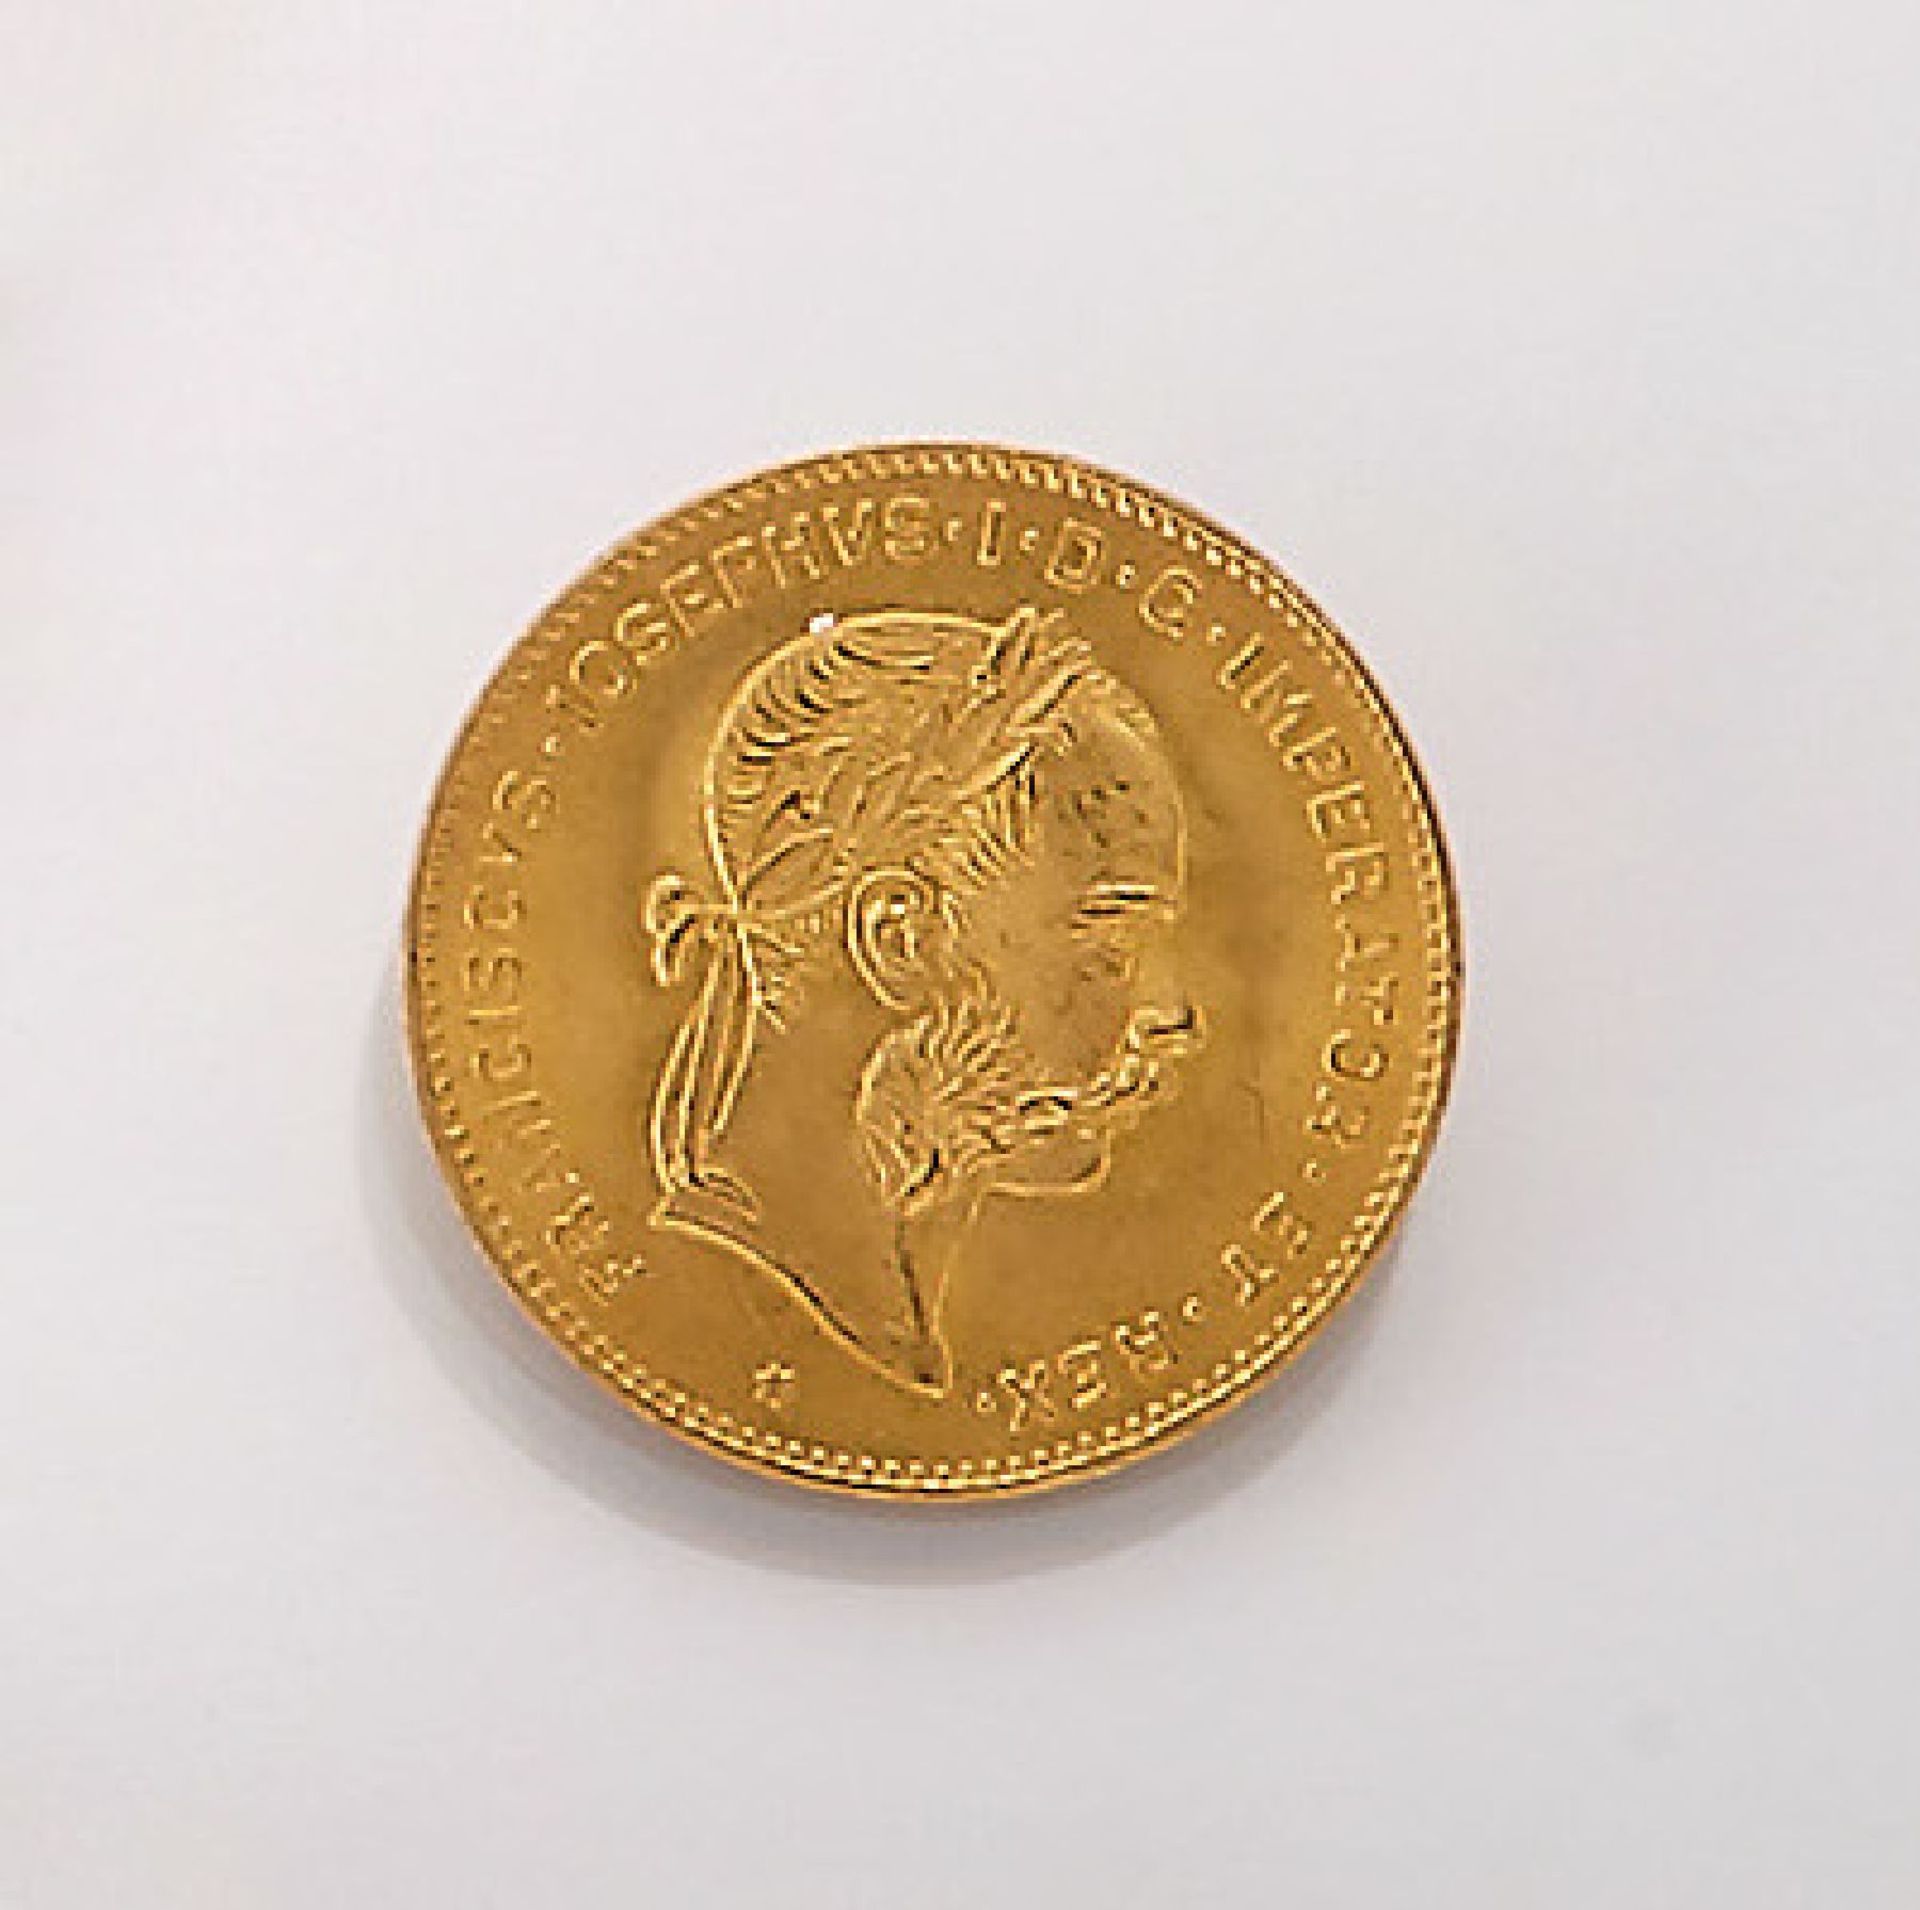 Goldmünze, 4 Florin, 10 Franken, Österreich- Ungarn, 1892, Franz Joseph I.Gold coin, 4 Florin, 10